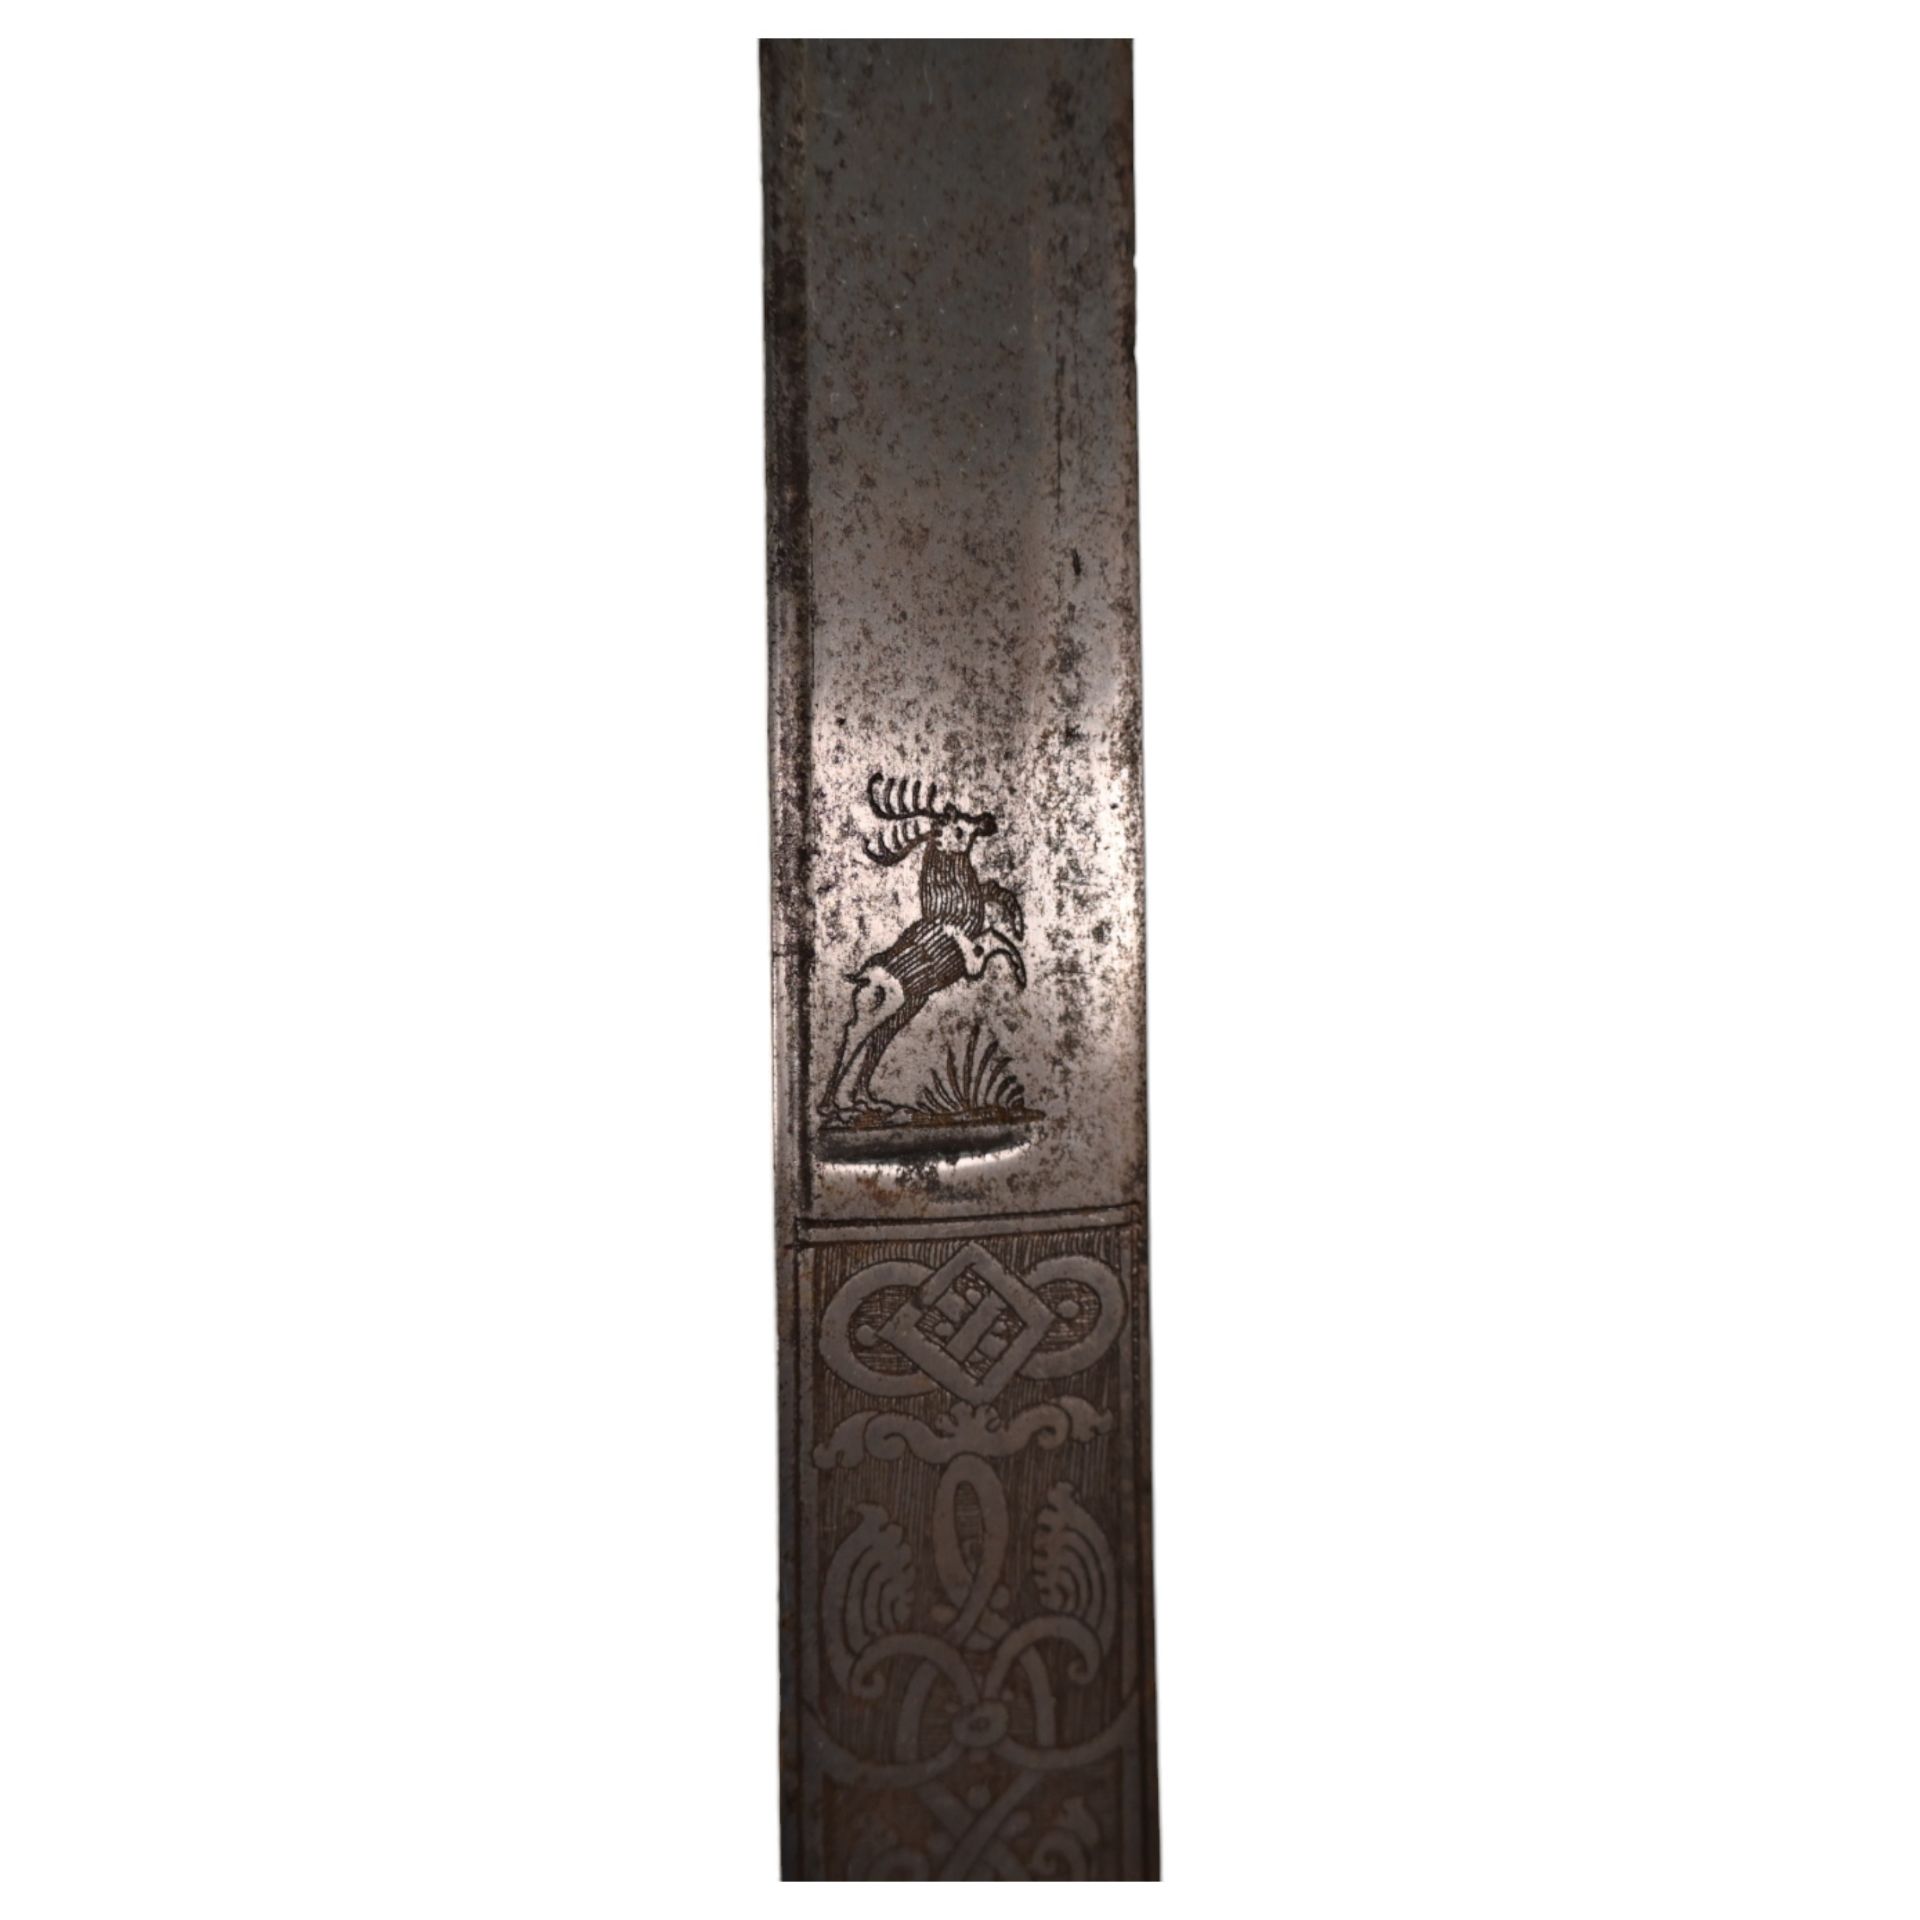 Rare Hunting Sword, 18th Century, Germany. - Image 7 of 12